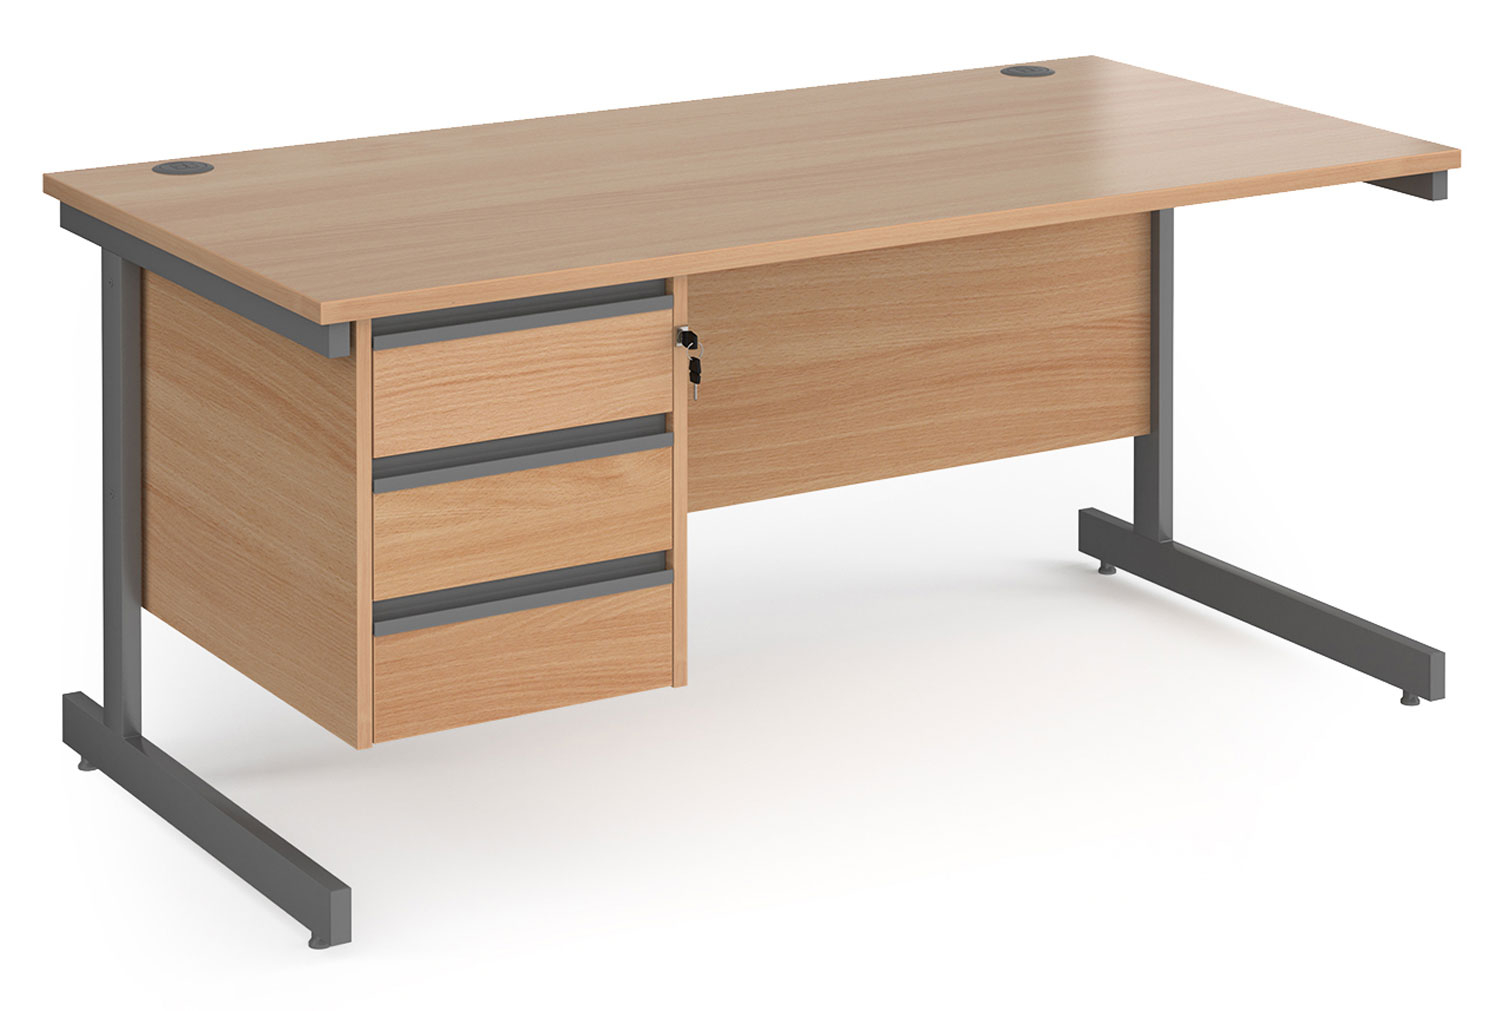 Value Line Classic+ Rectangular C-Leg Office Desk 3 Drawers (Graphite Leg), 160wx80dx73h (cm), Beech